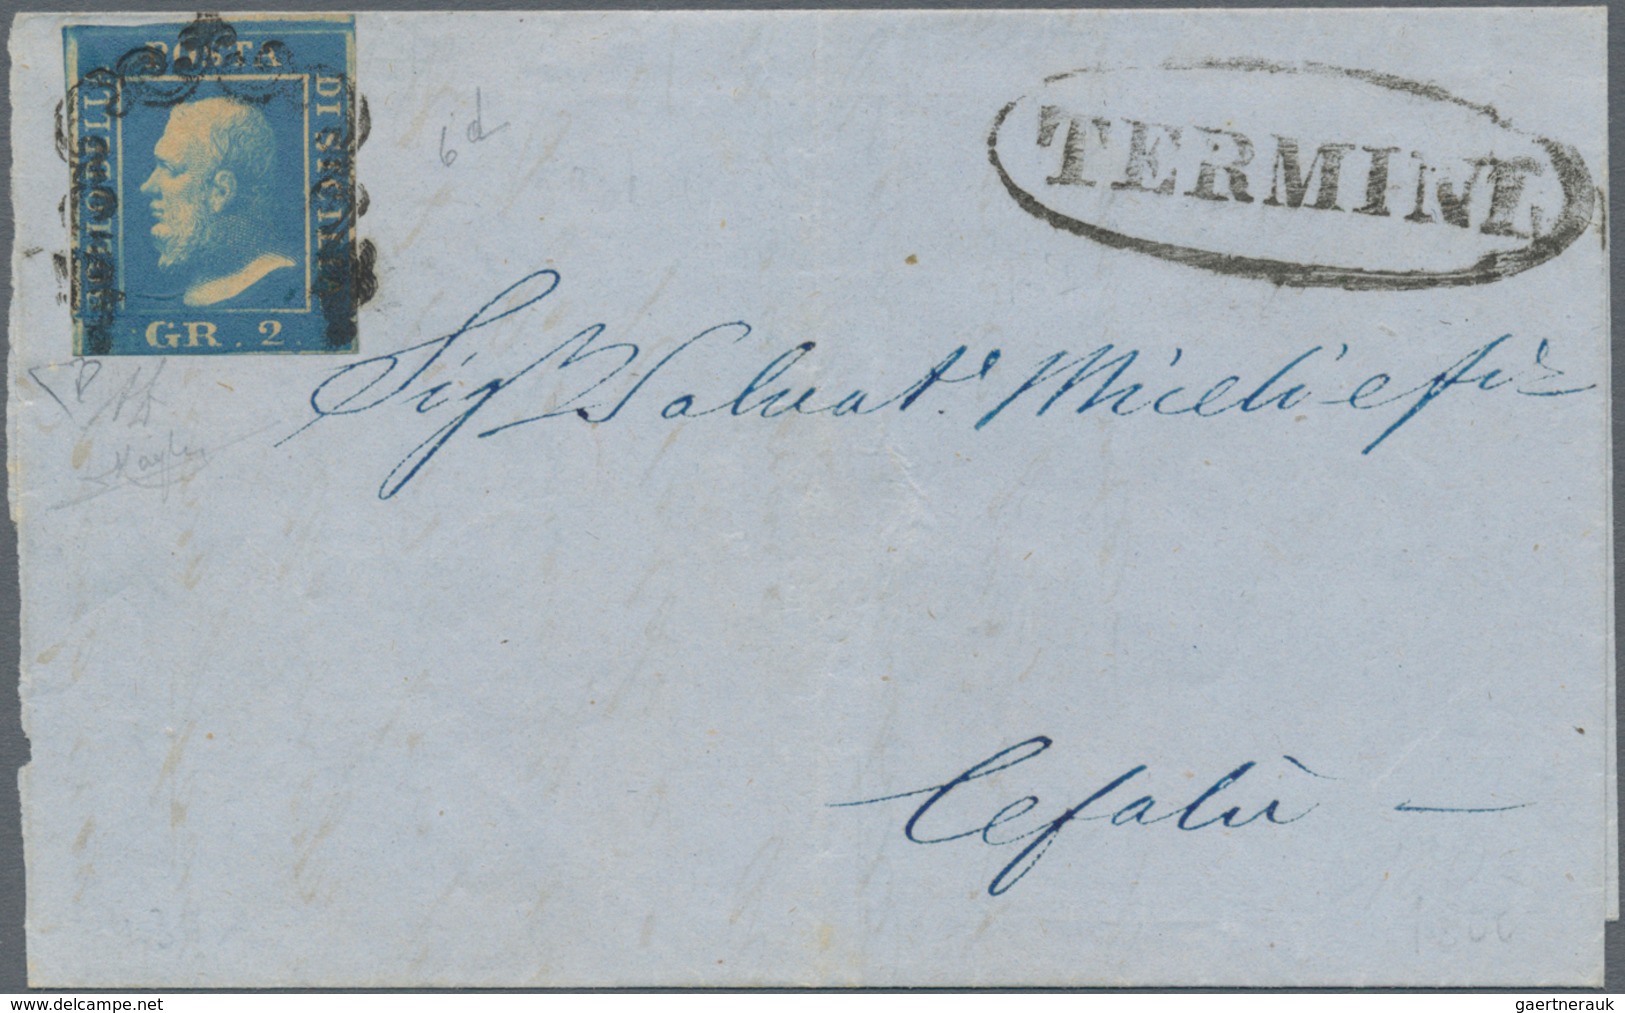 00867 Italien - Altitalienische Staaten: Sizilien: 1859, 2 Grana Ultramarin, First Plate, On A Letter Addr - Sicily